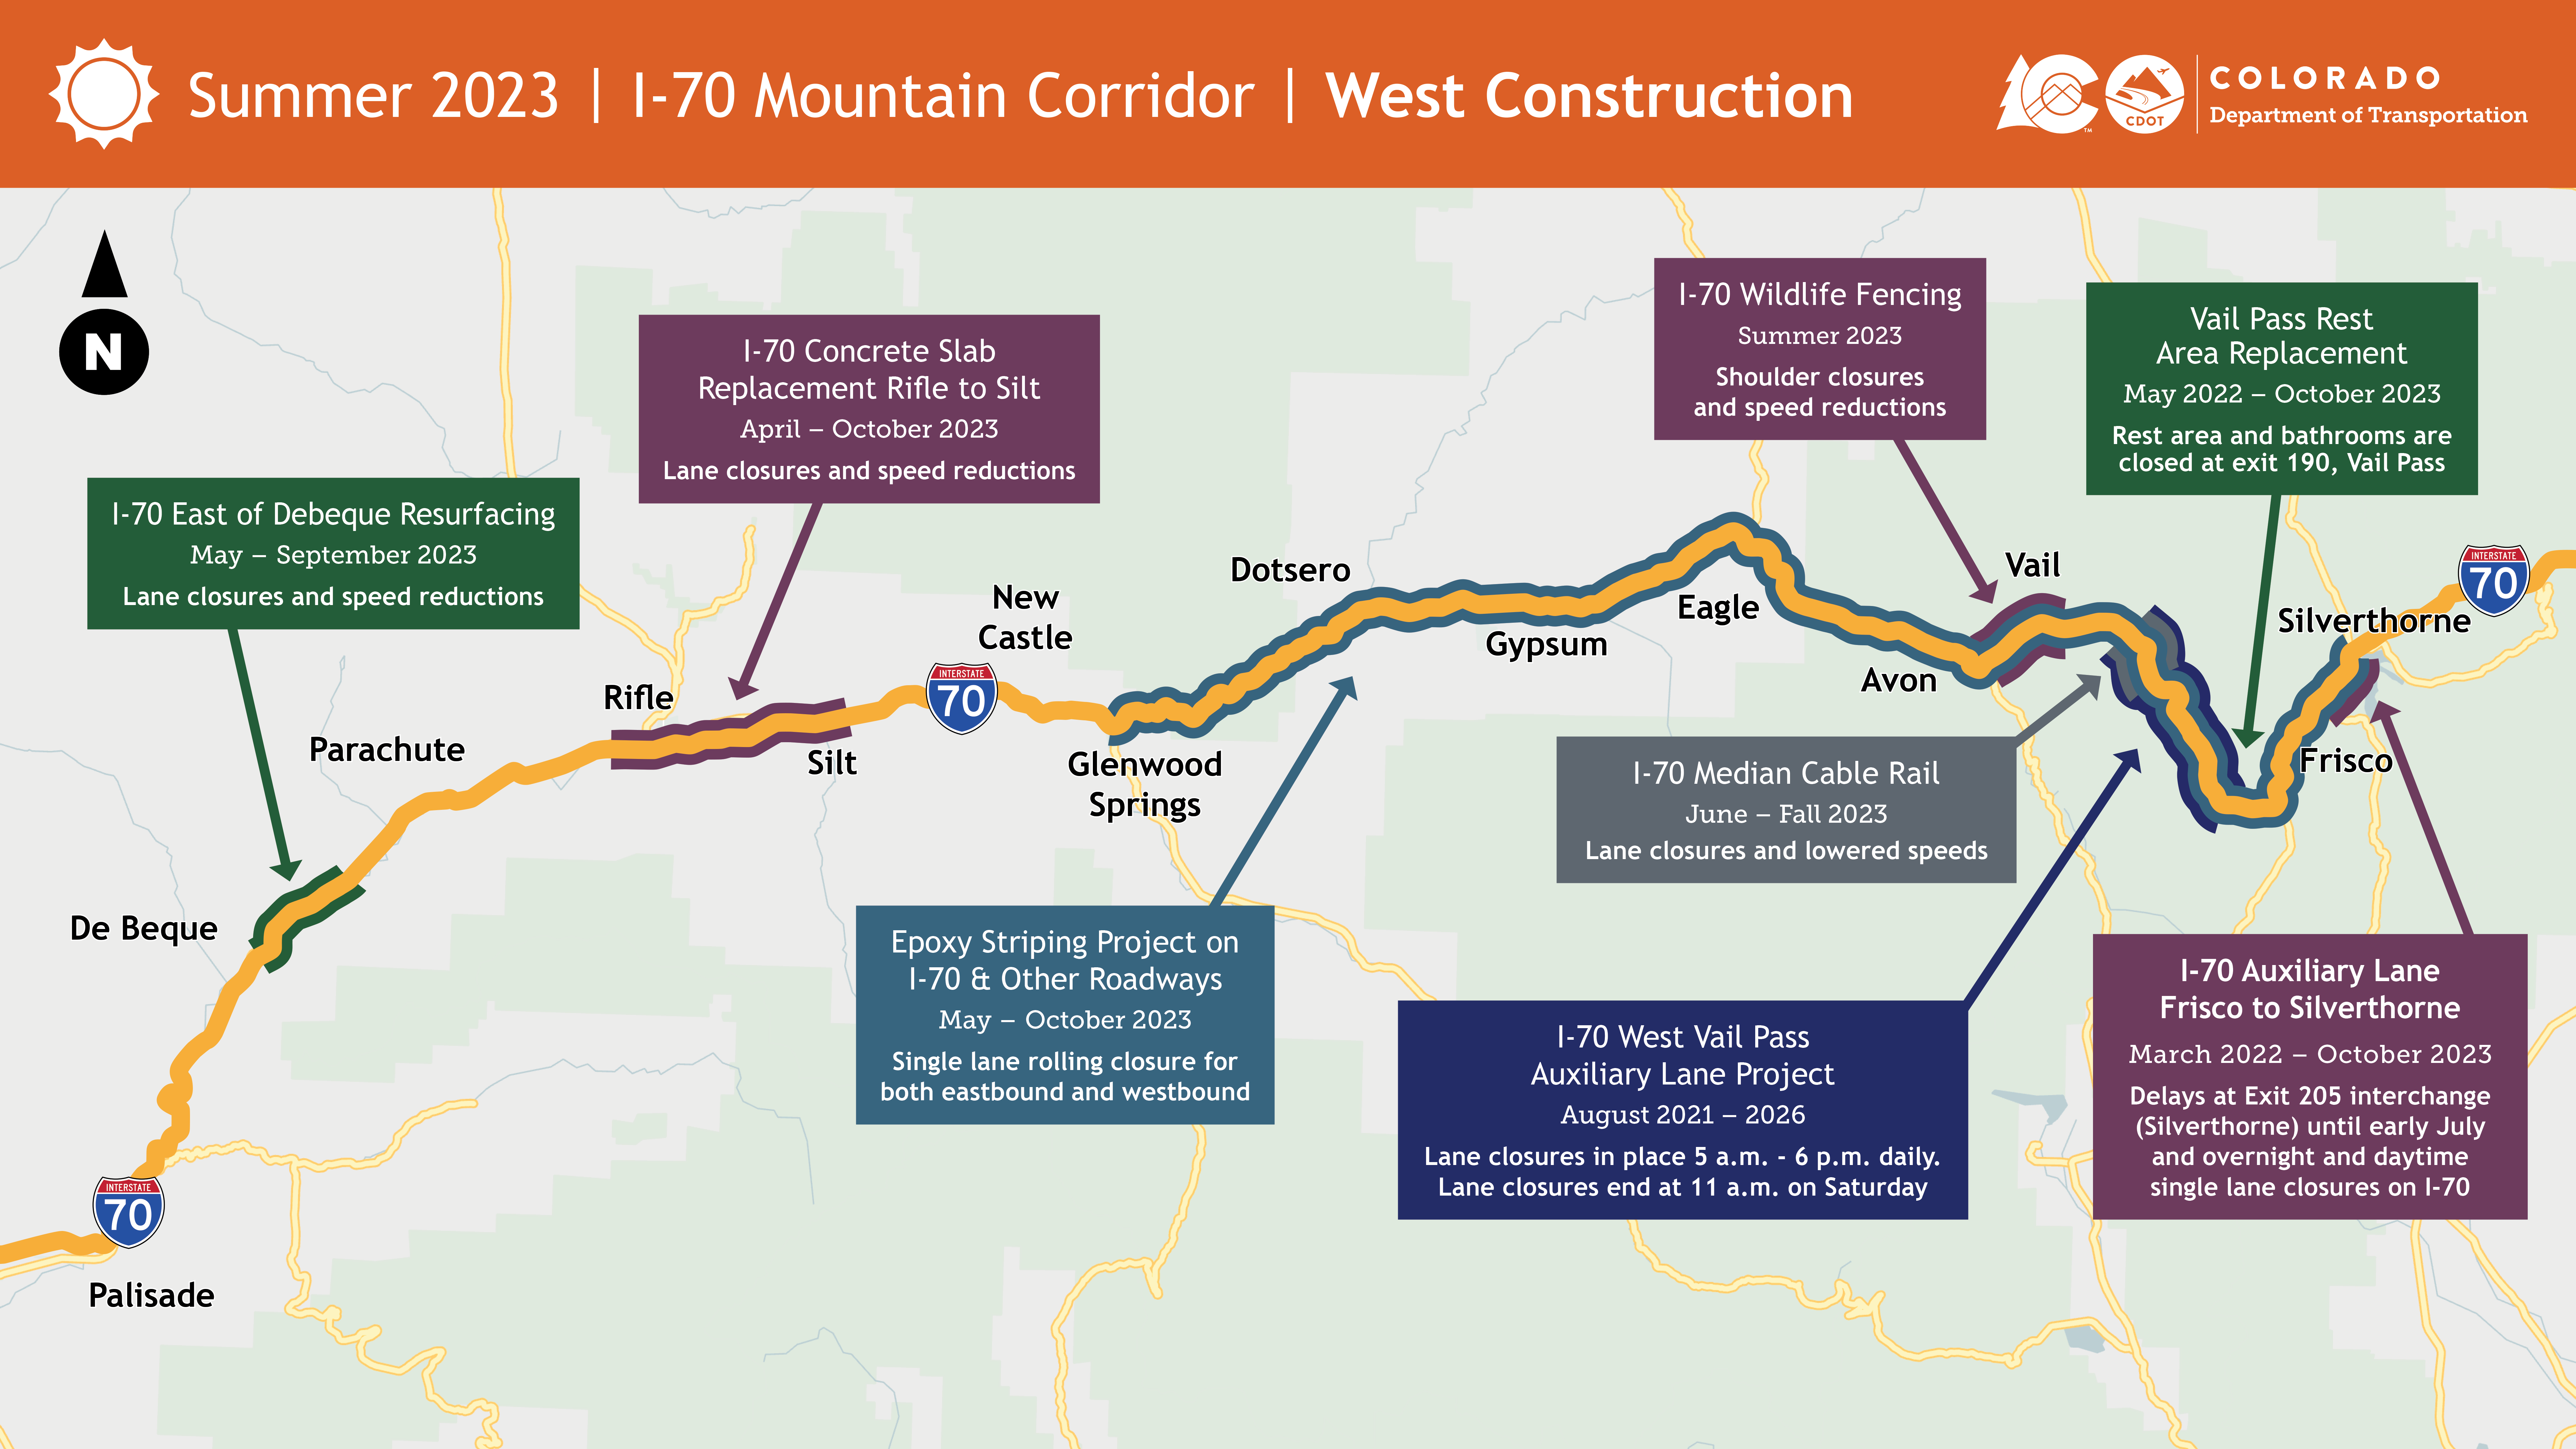 I-70-Mtn-Corridor-Construction-Map-Summer-2023_WEST (1).png detail image